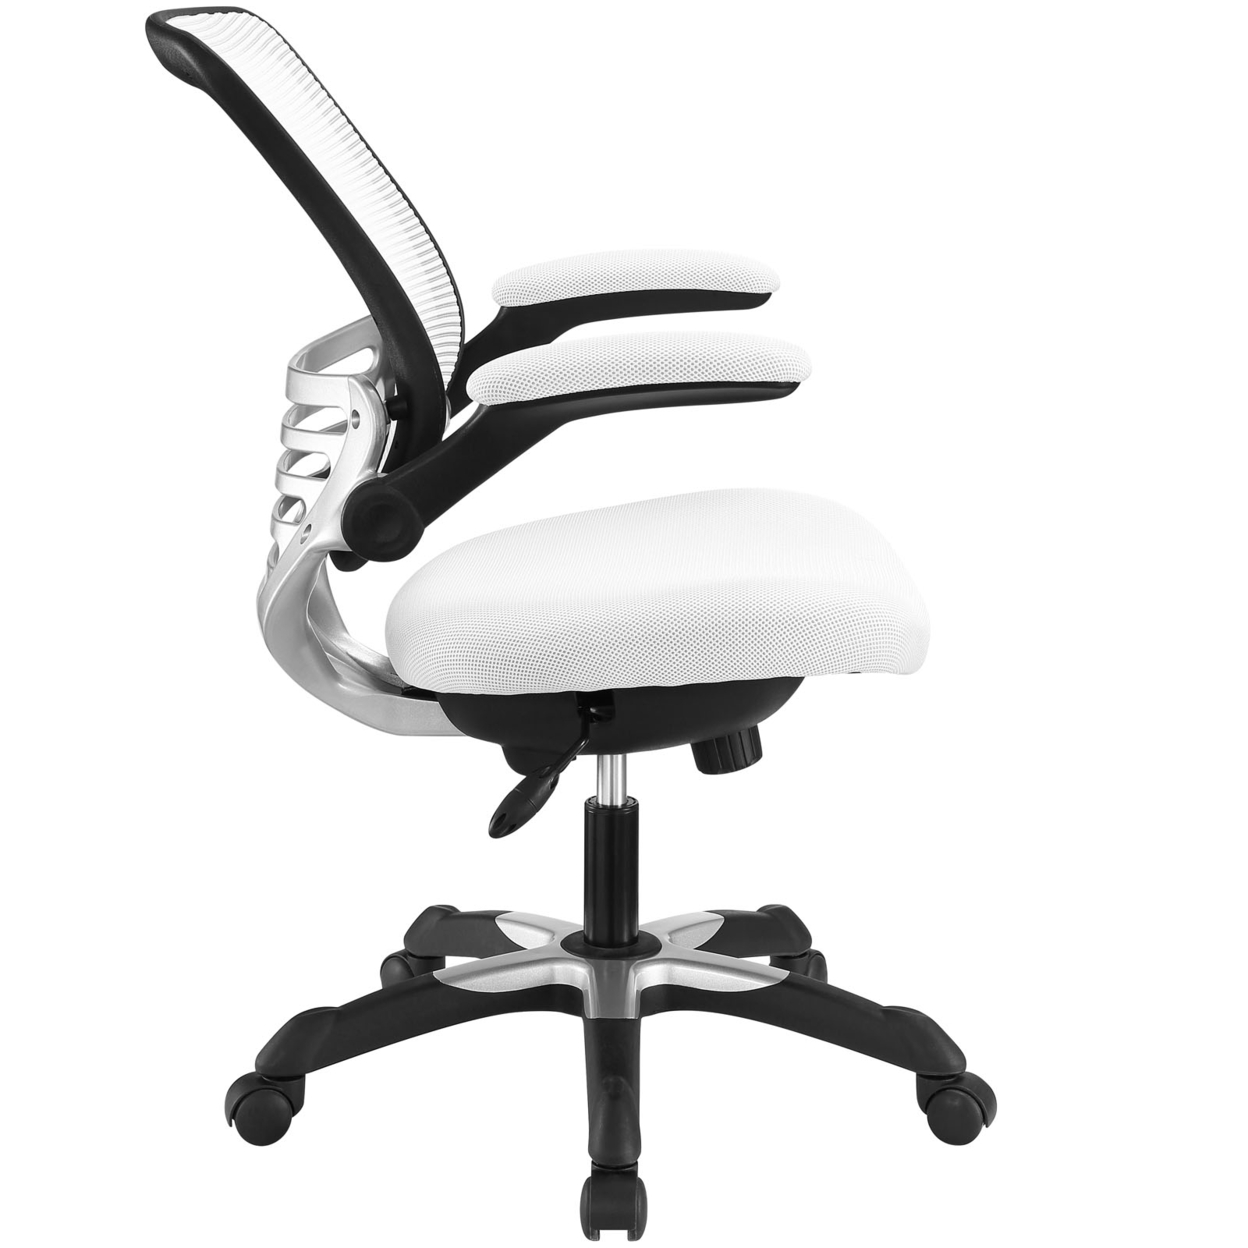 Edge Mesh Office Chair EEI-594-WHI - image 3 of 4